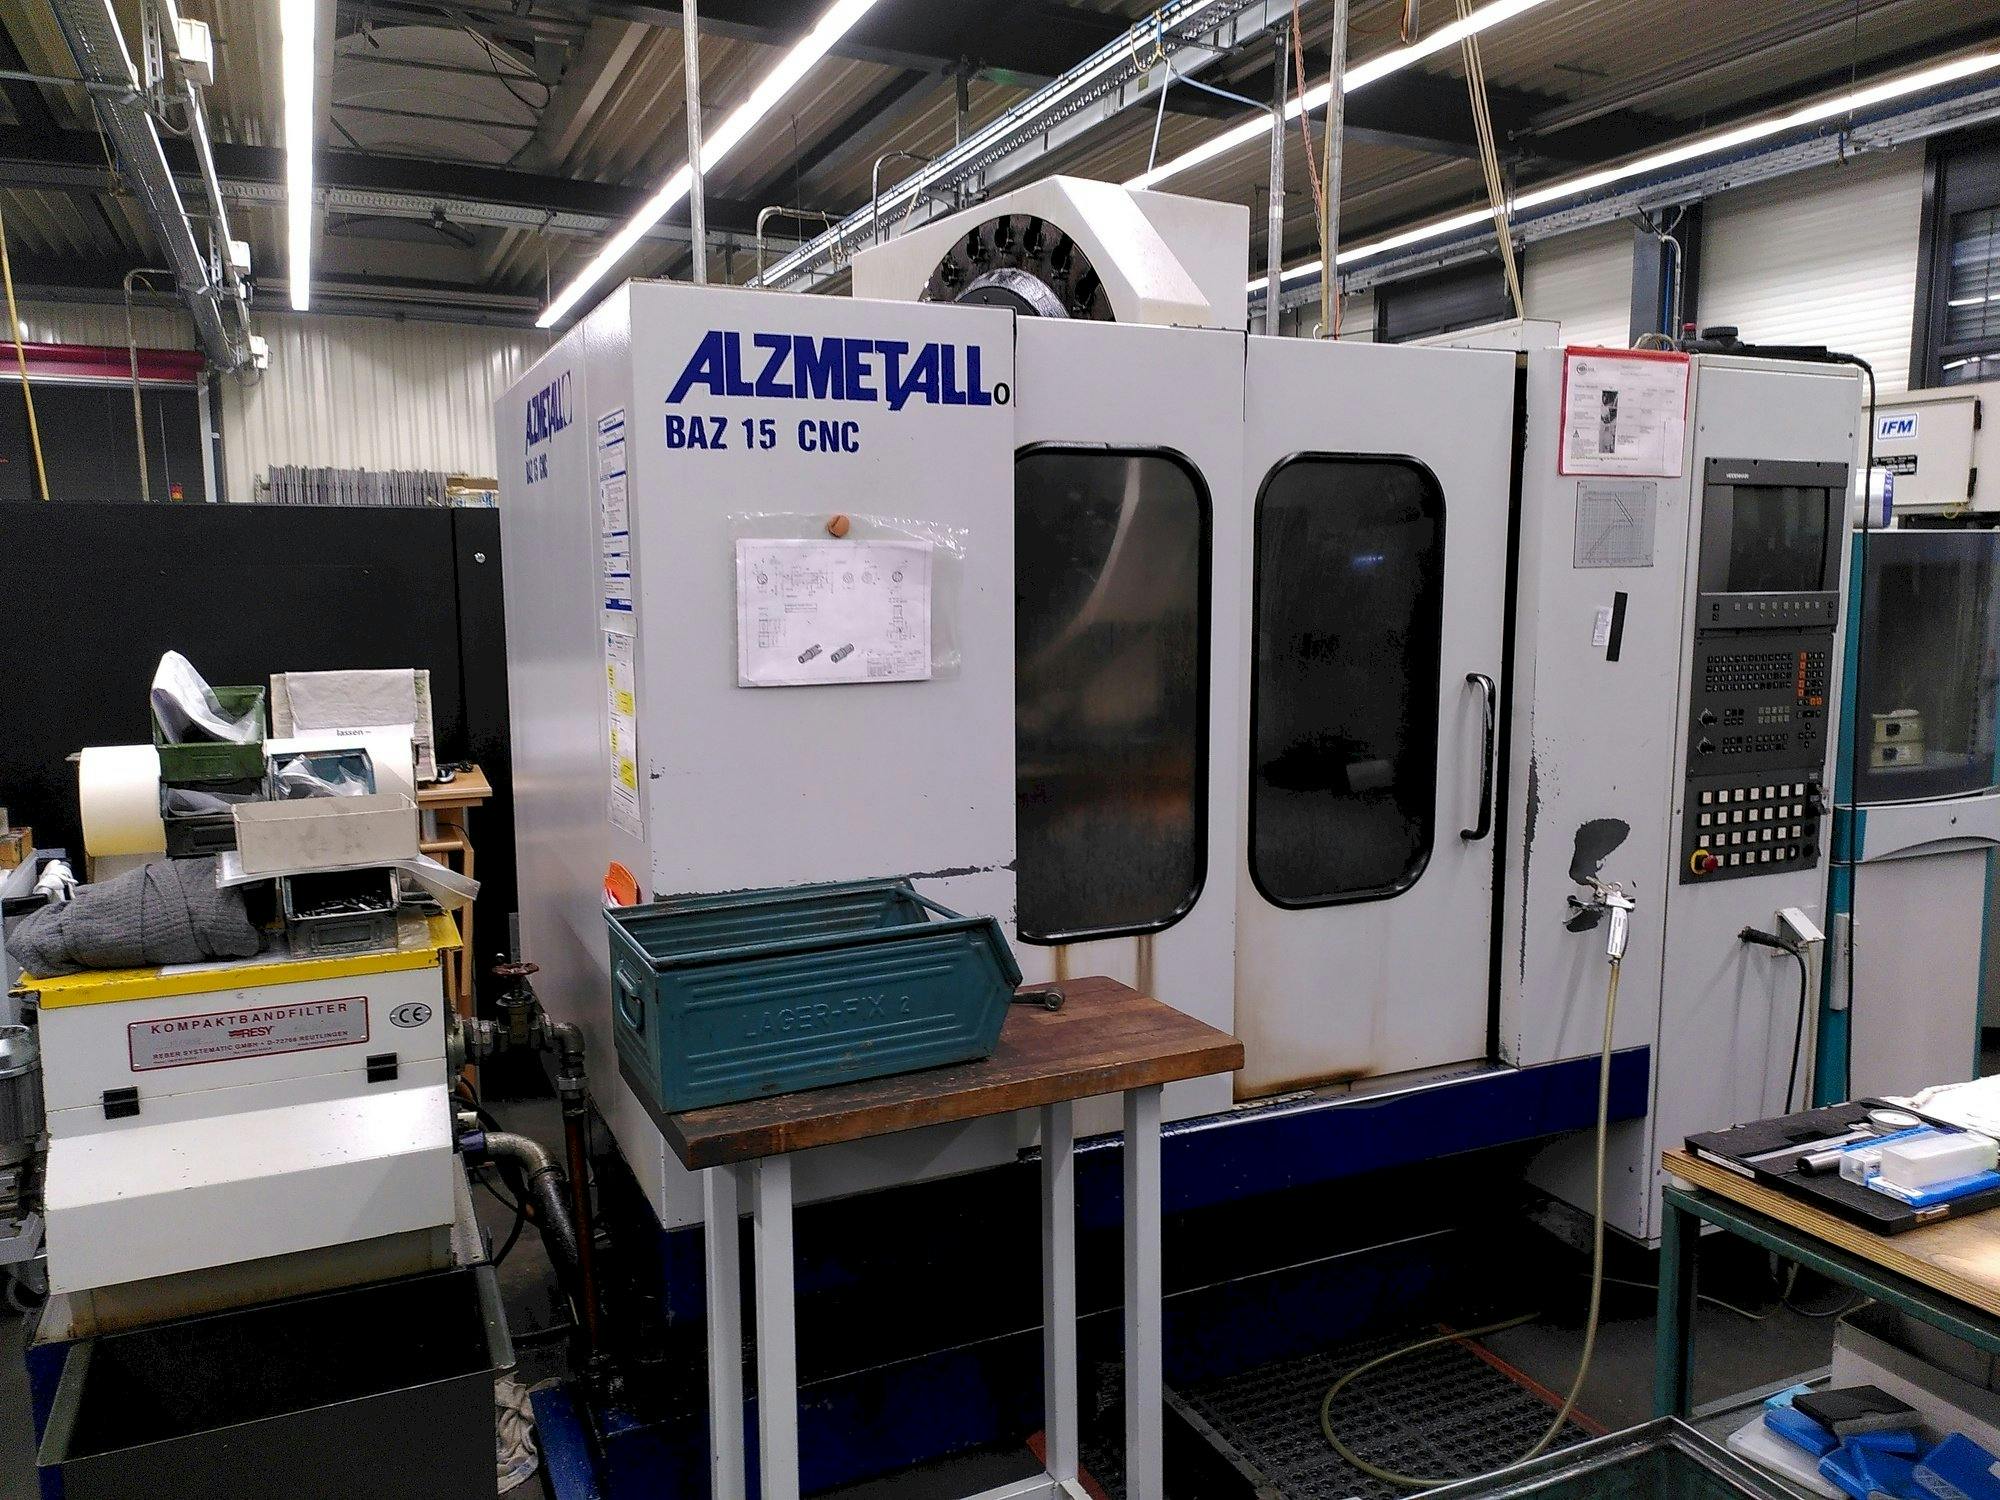 Front view of Alzmetall BAZ 15 CNC  machine